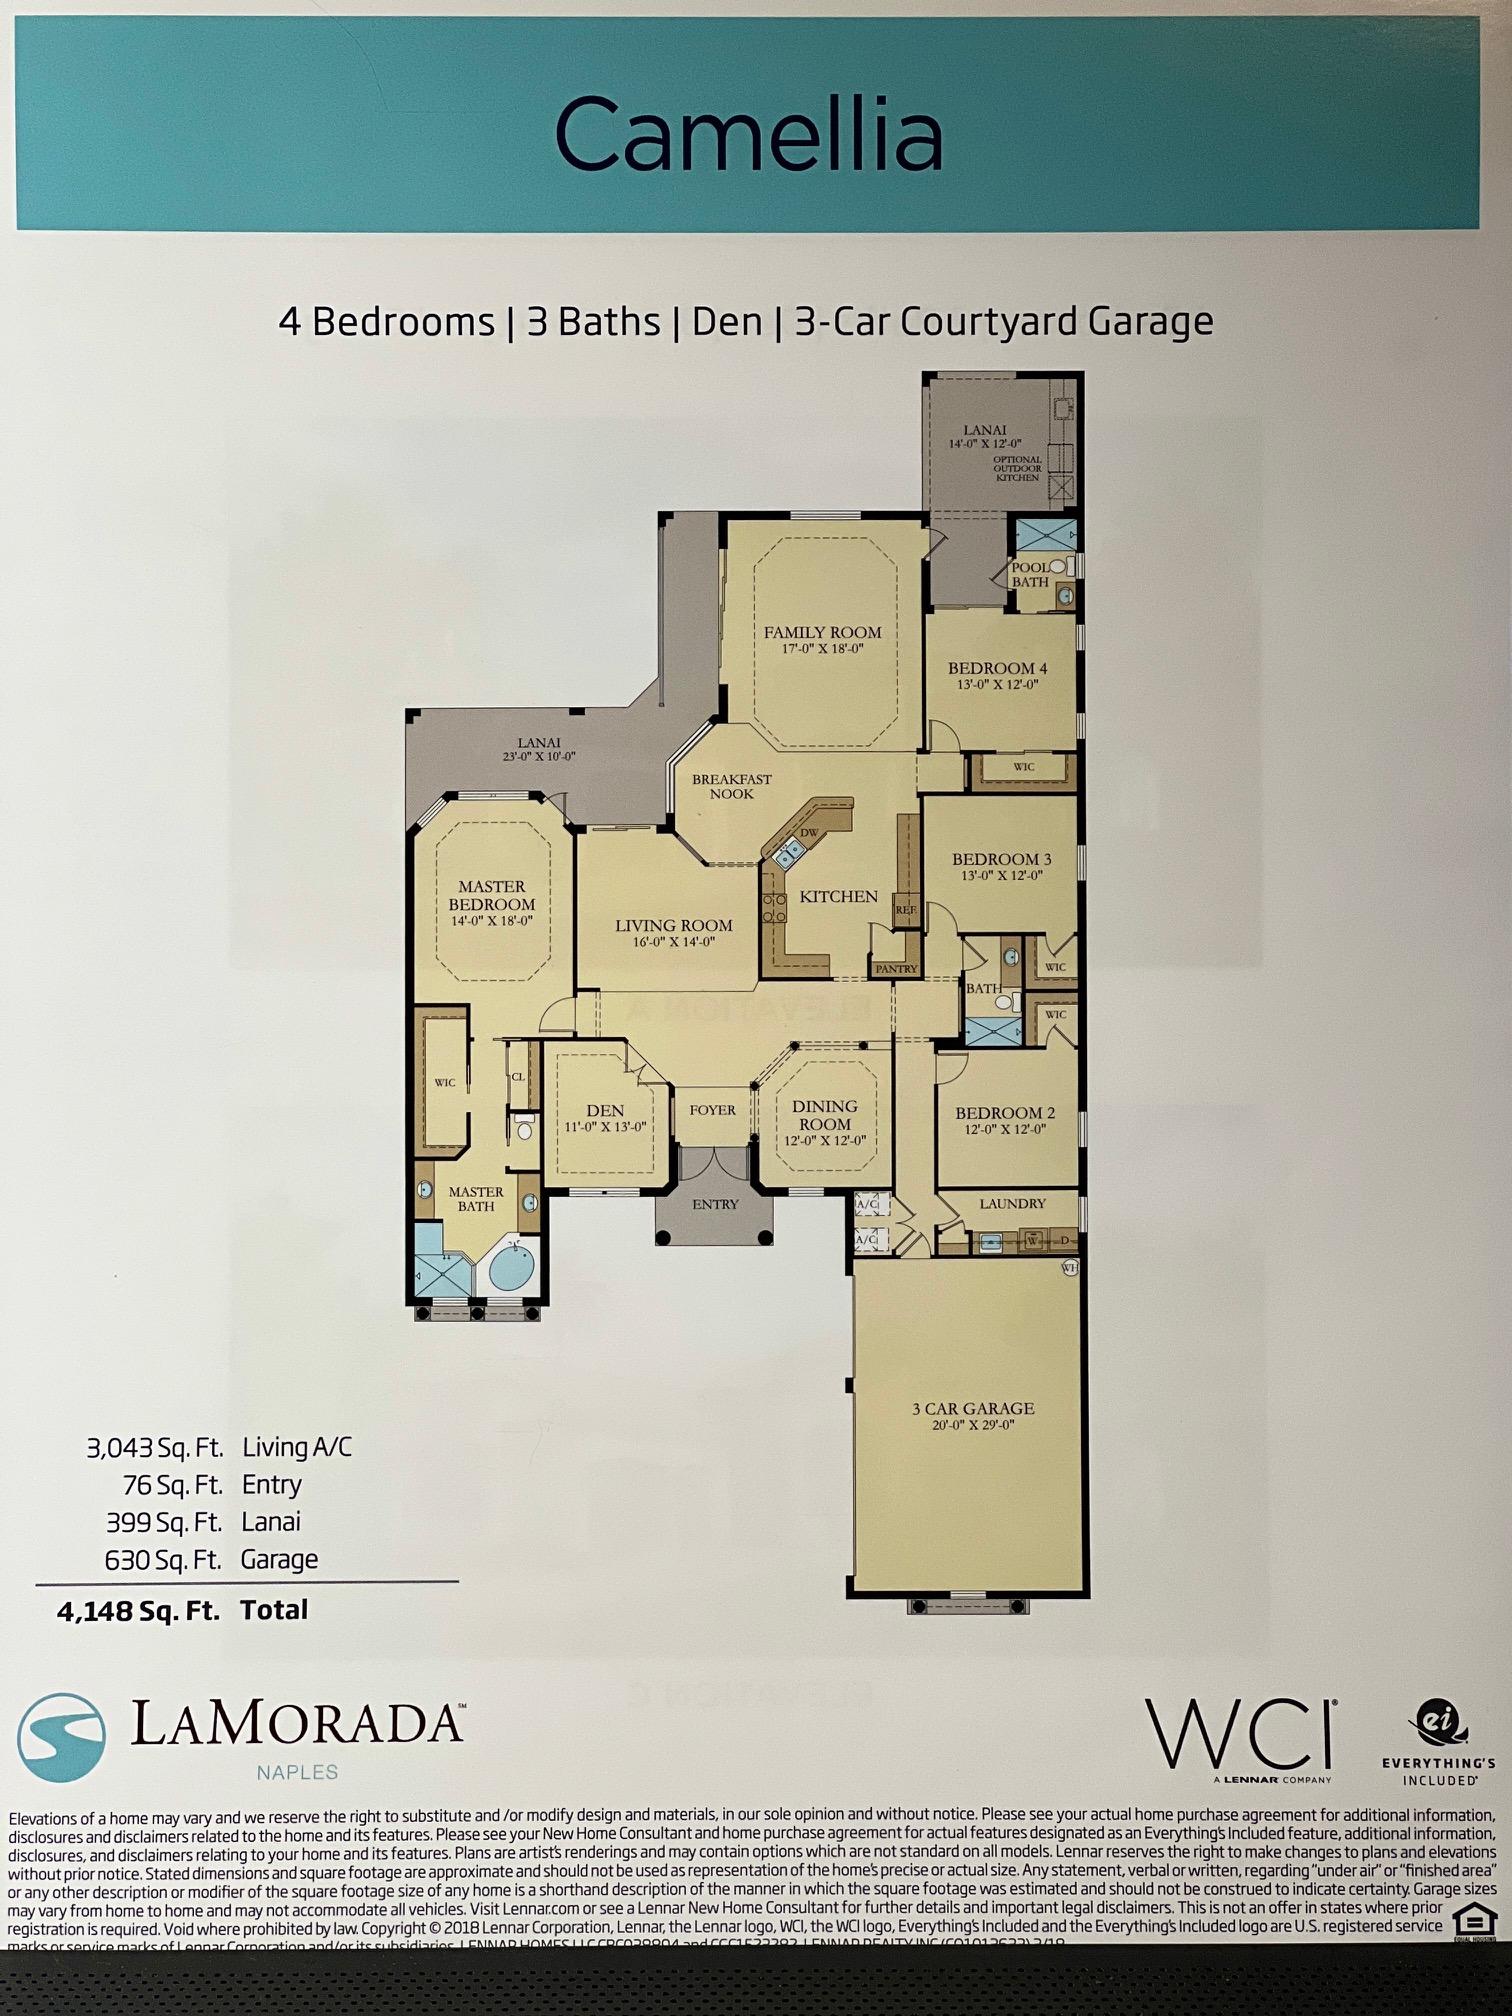 Lamorada Camellia Floor Plan